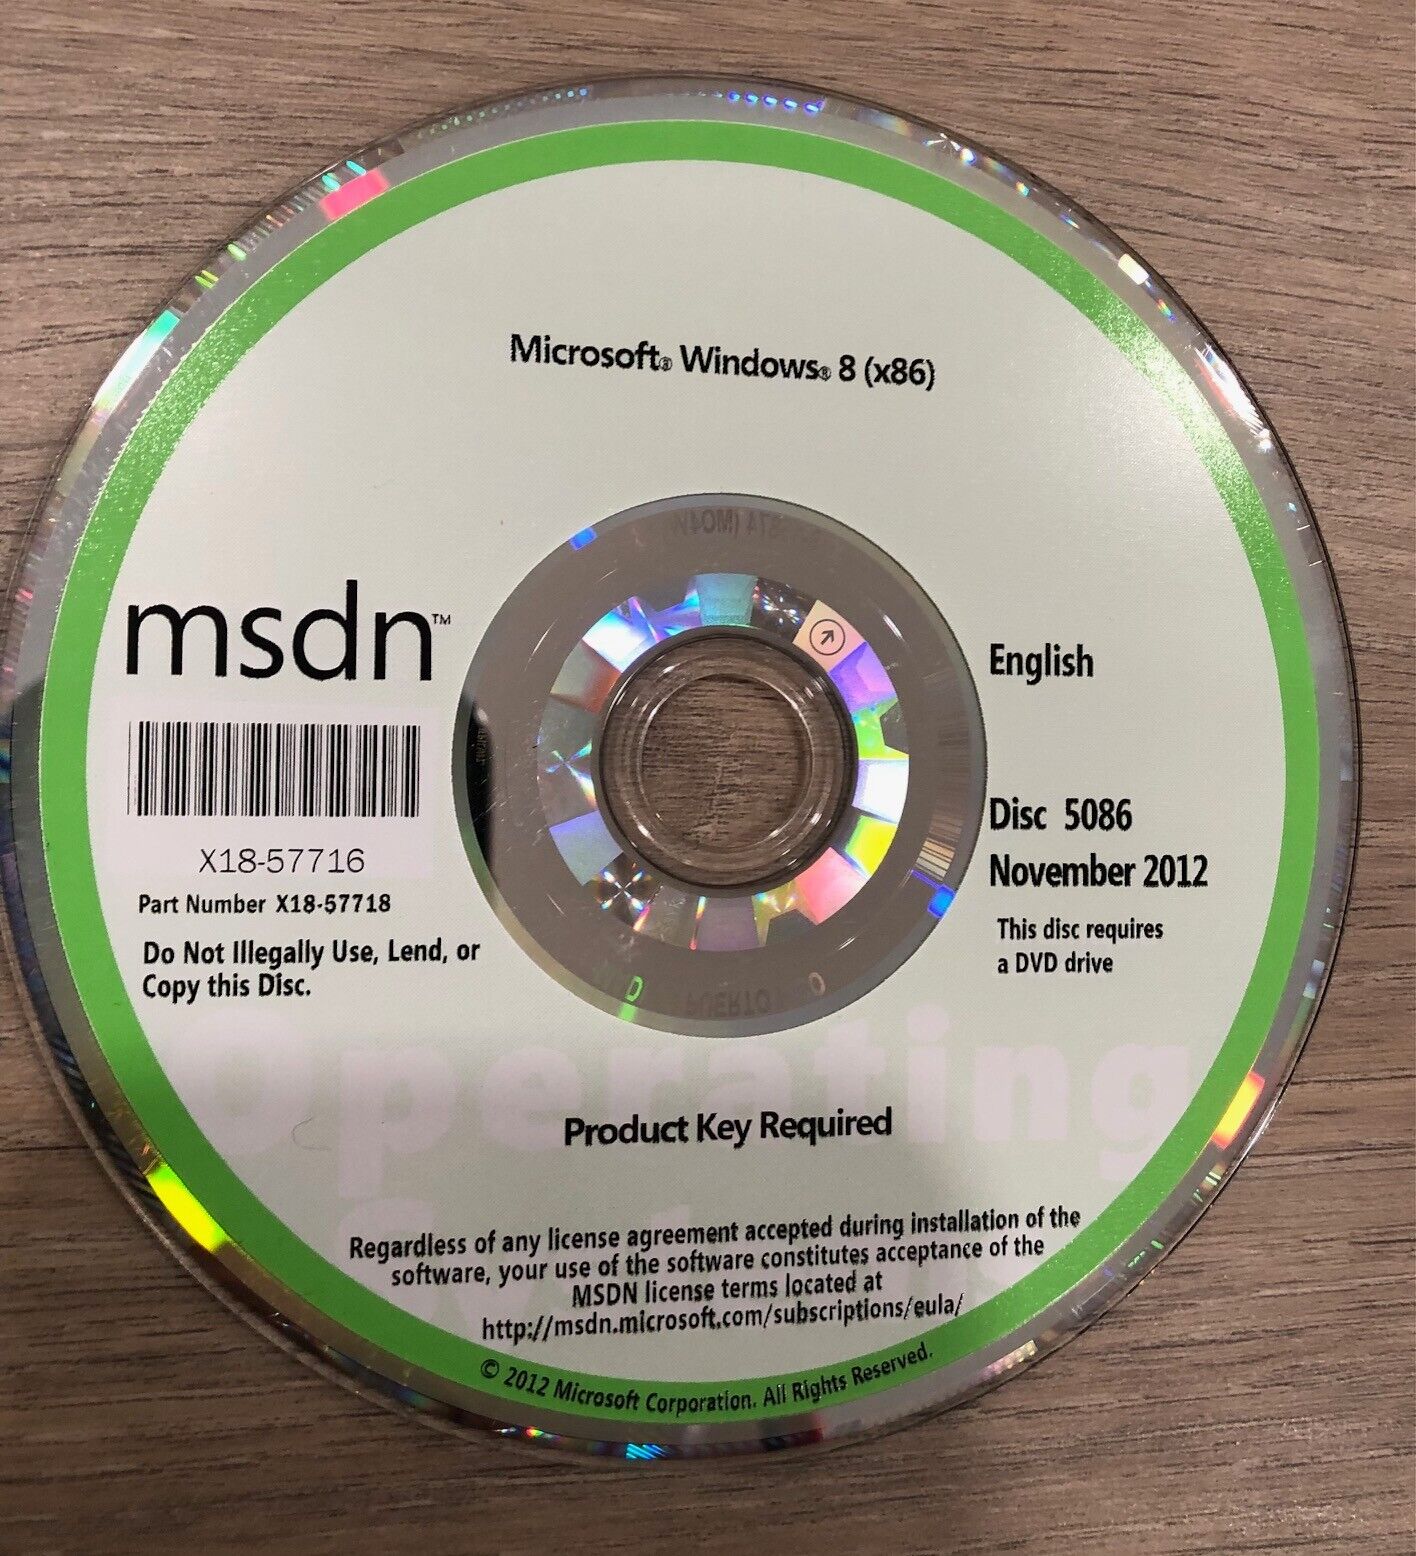 Microsoft MSDN Windows 8 (x86) November 2012 Disc 5086 English CD - No key